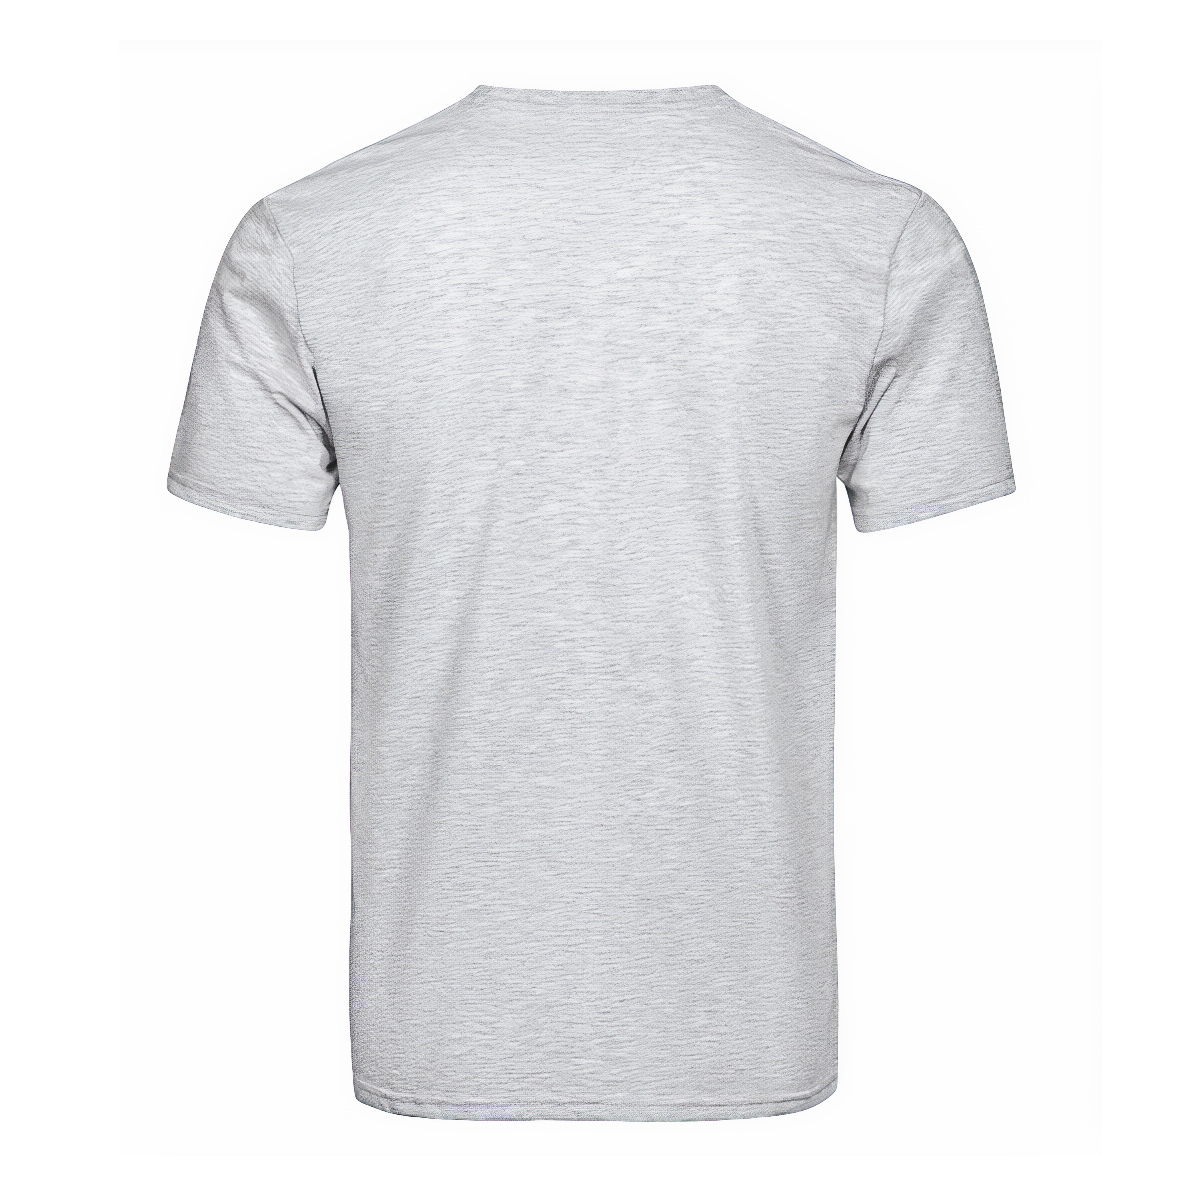 Don Tartan Crest T-shirt - I'm not yelling style